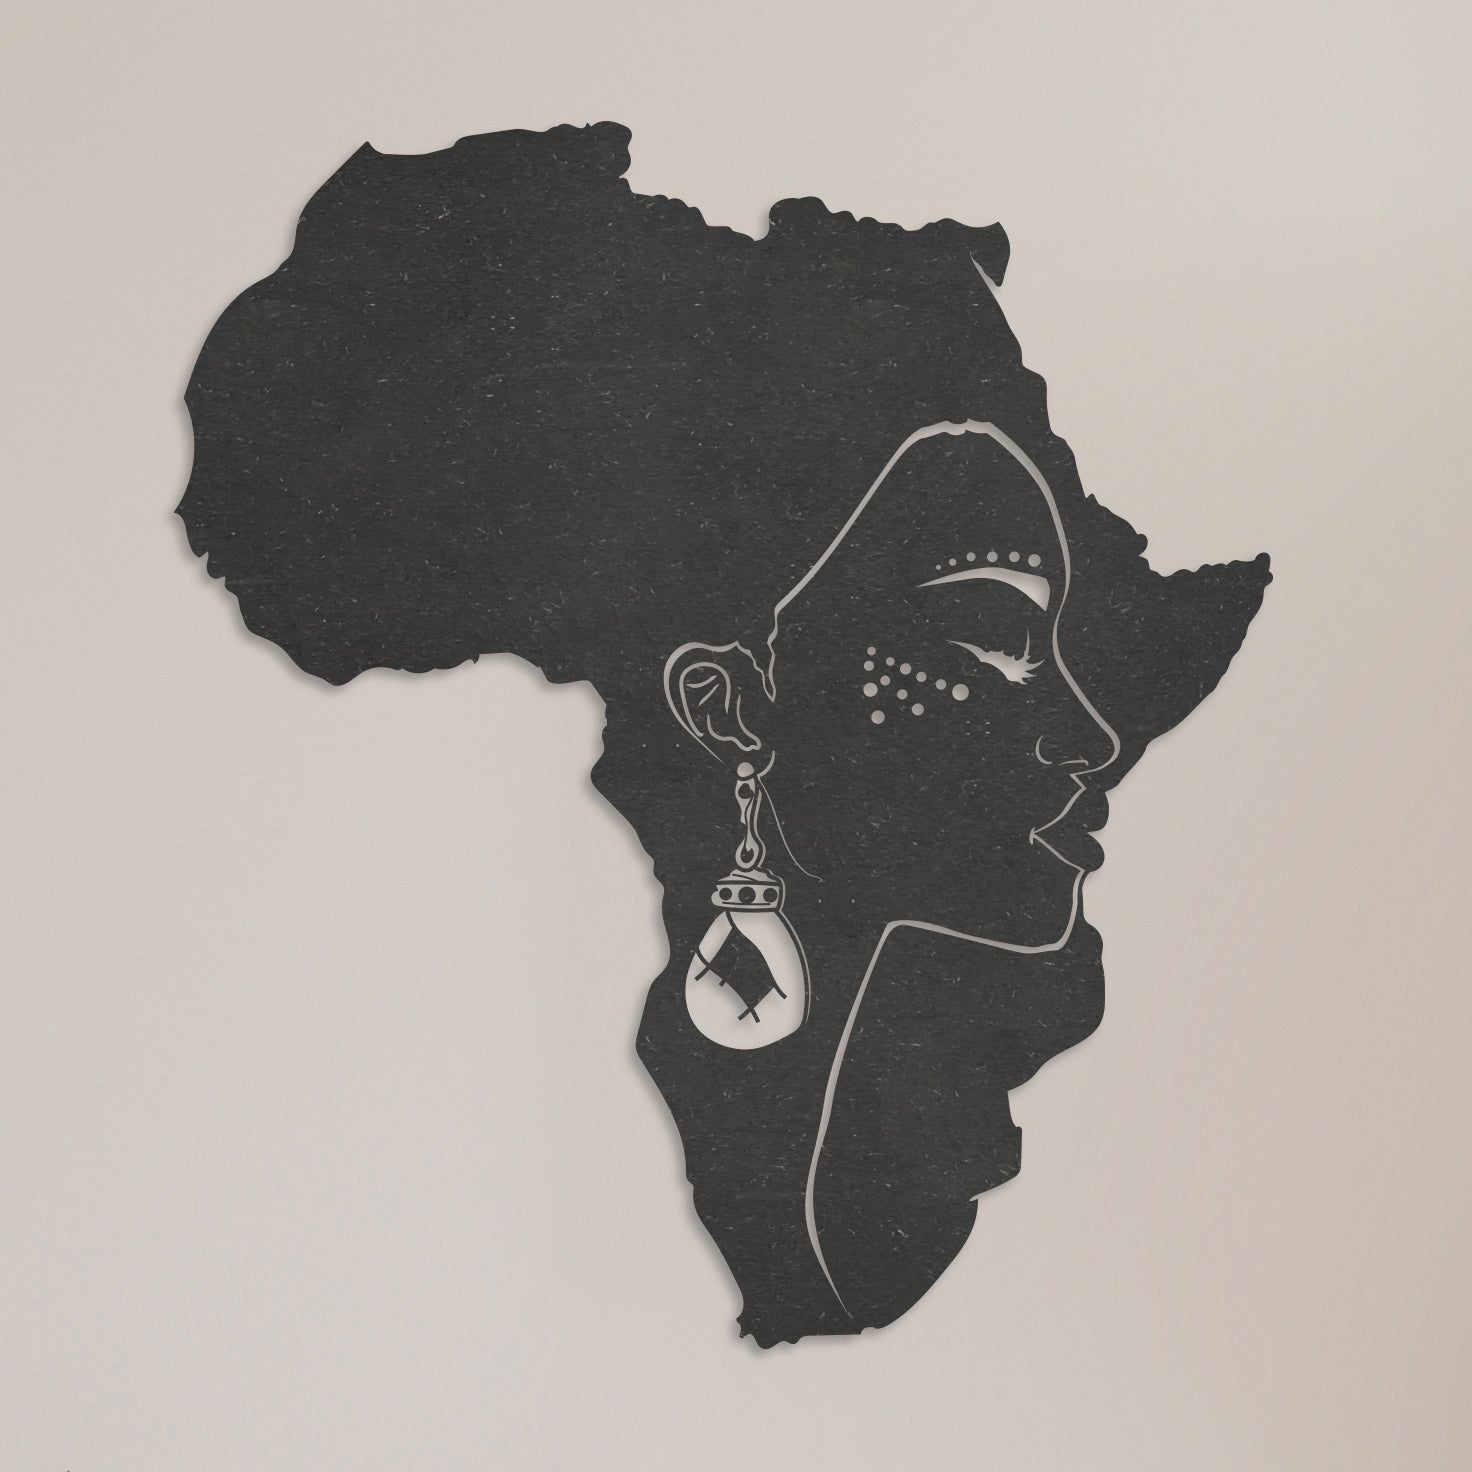 Wanddecoratie | Kaart Afrika vrouw